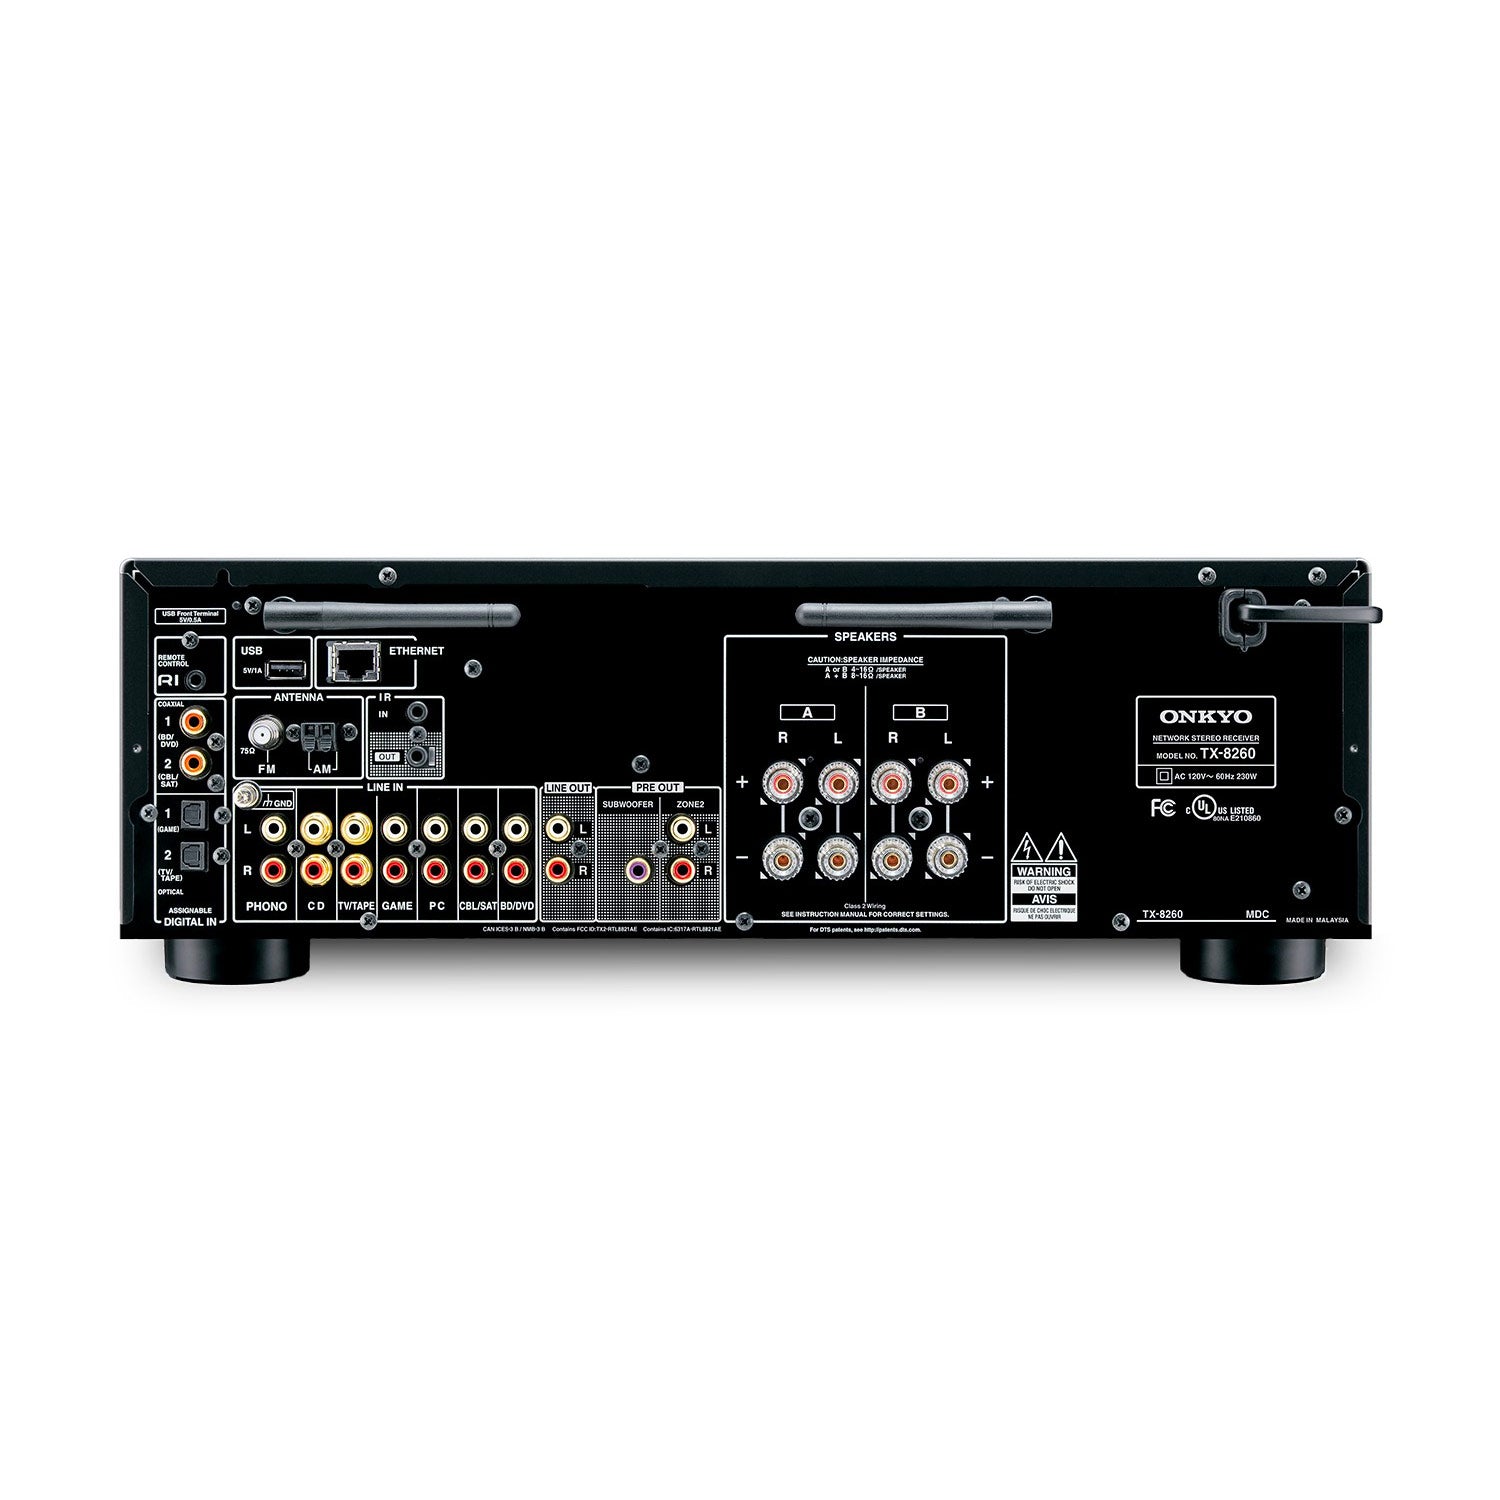 Onkyo TX-8260 Network Stereo Receiver